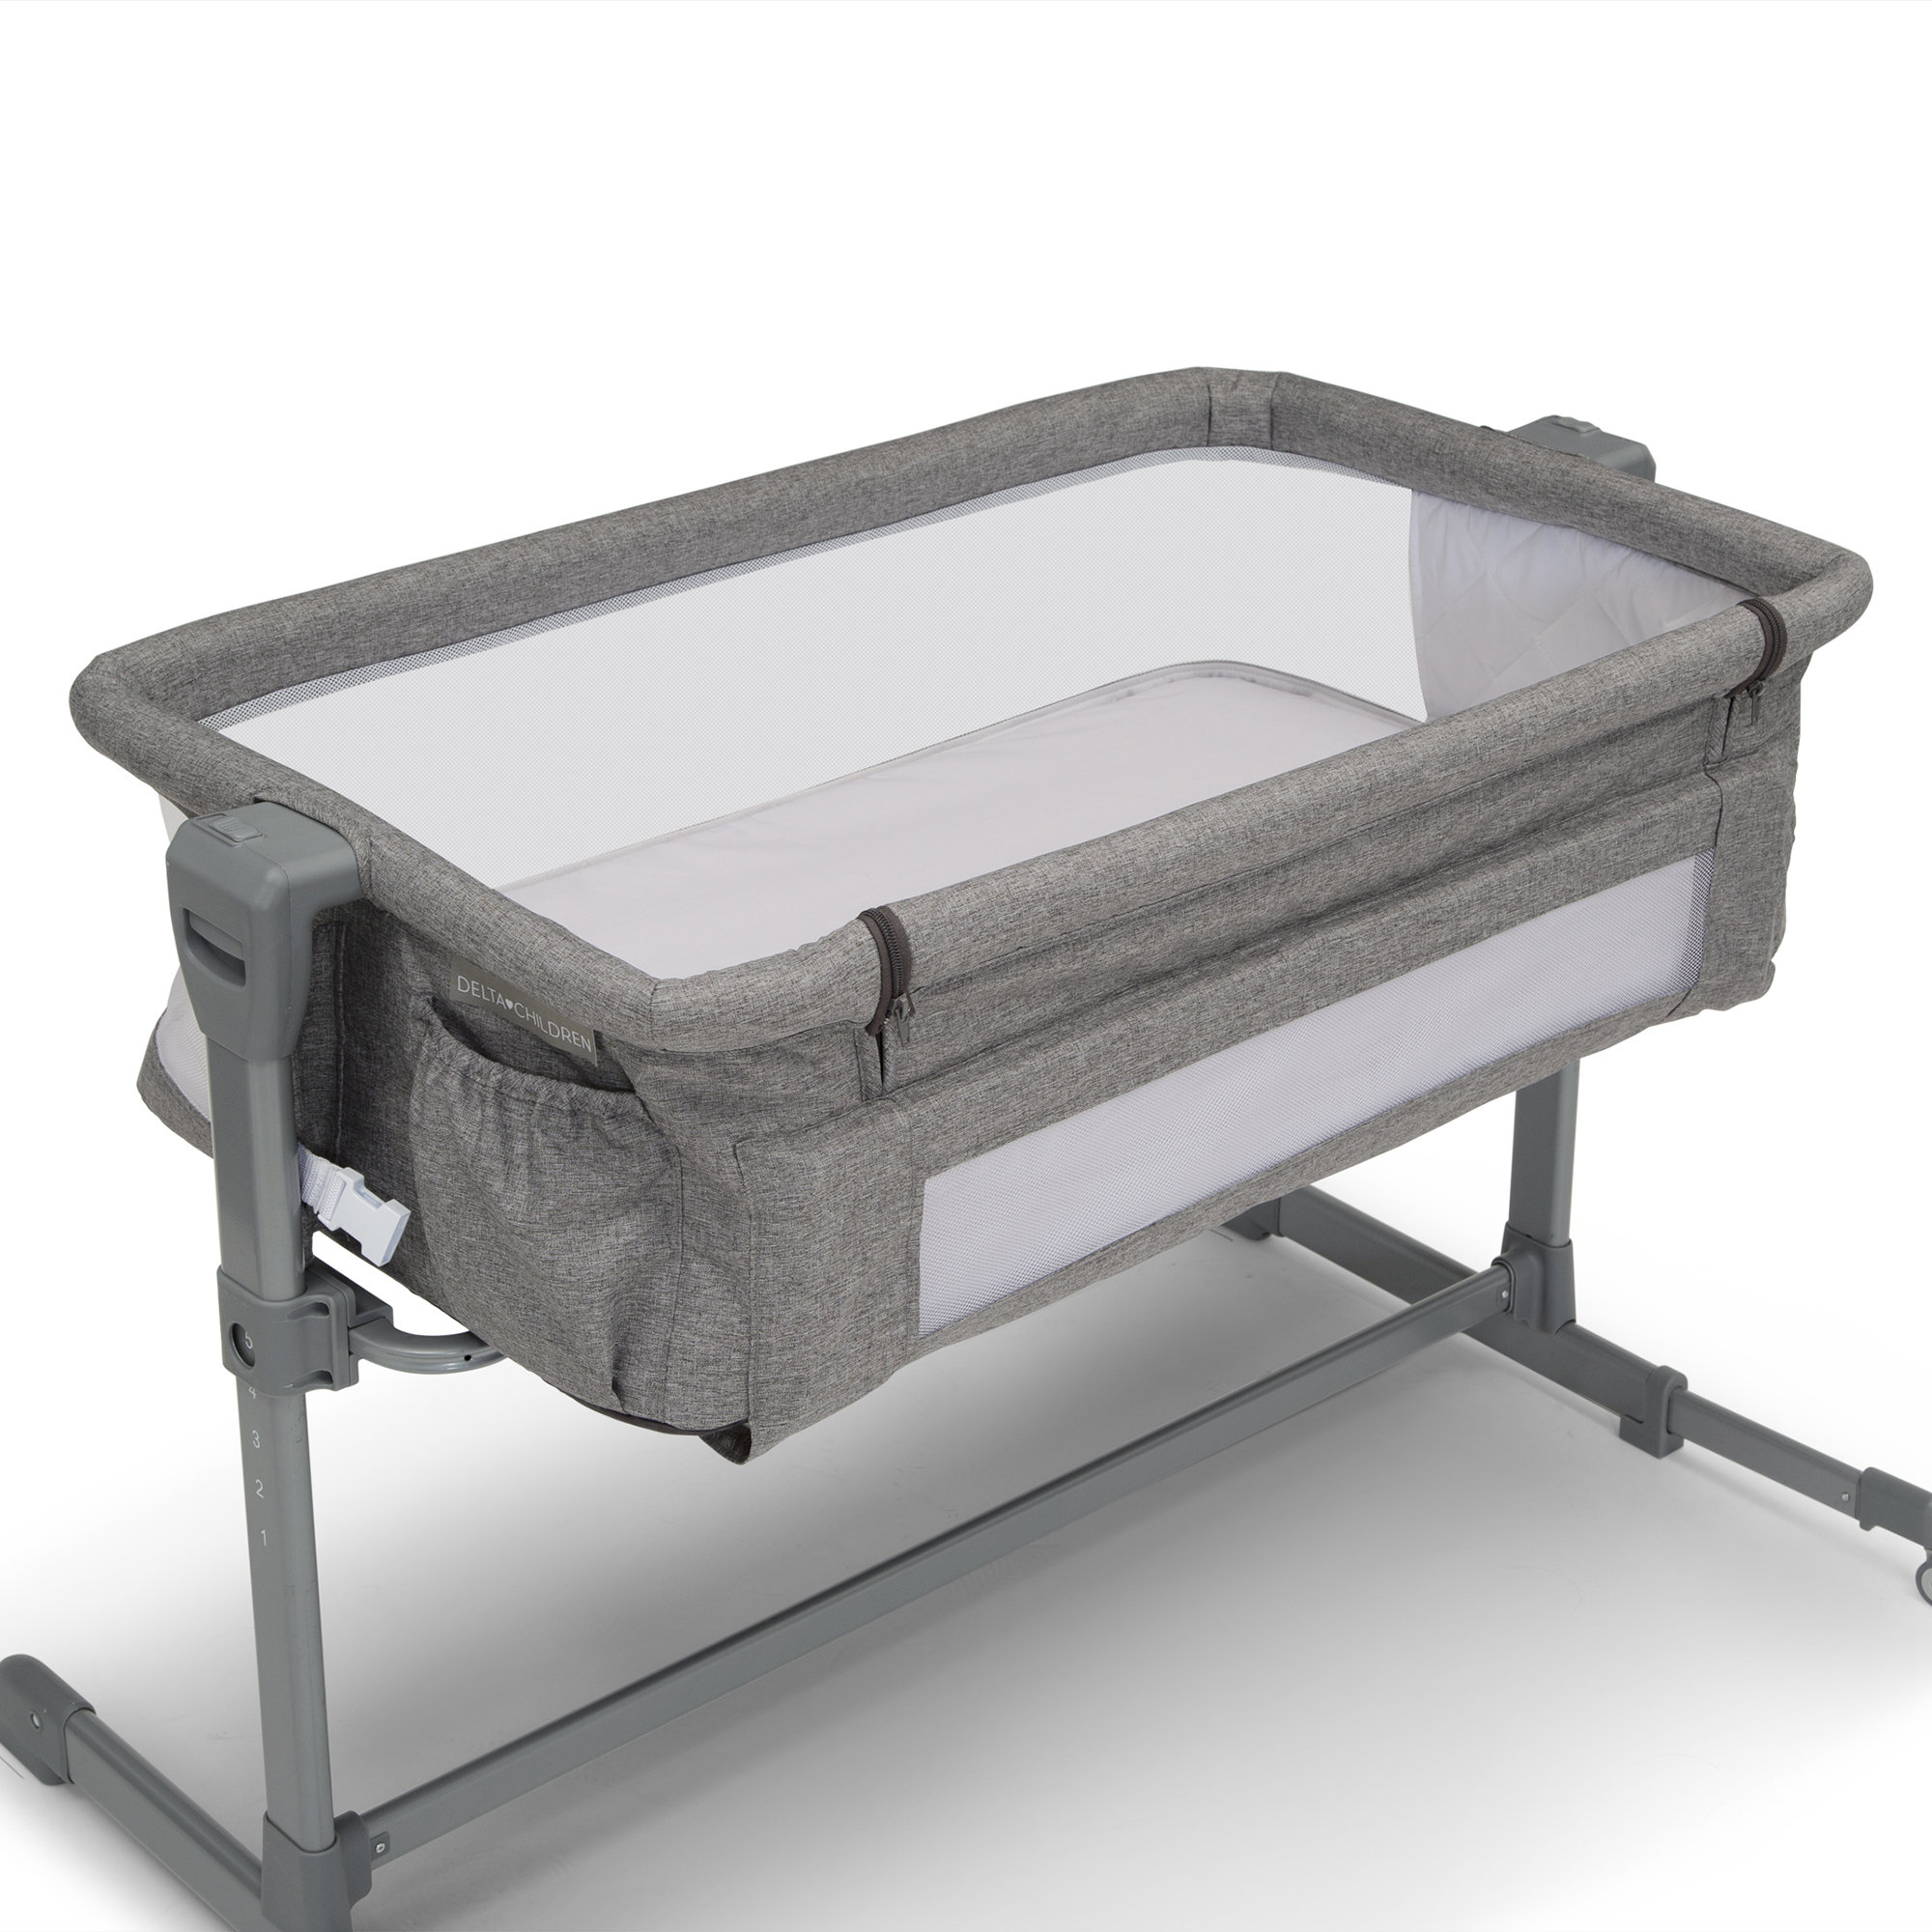 BABY Crib Bedside Cot bed with Mattress Caretero Sleep2gether Adjustable Height 